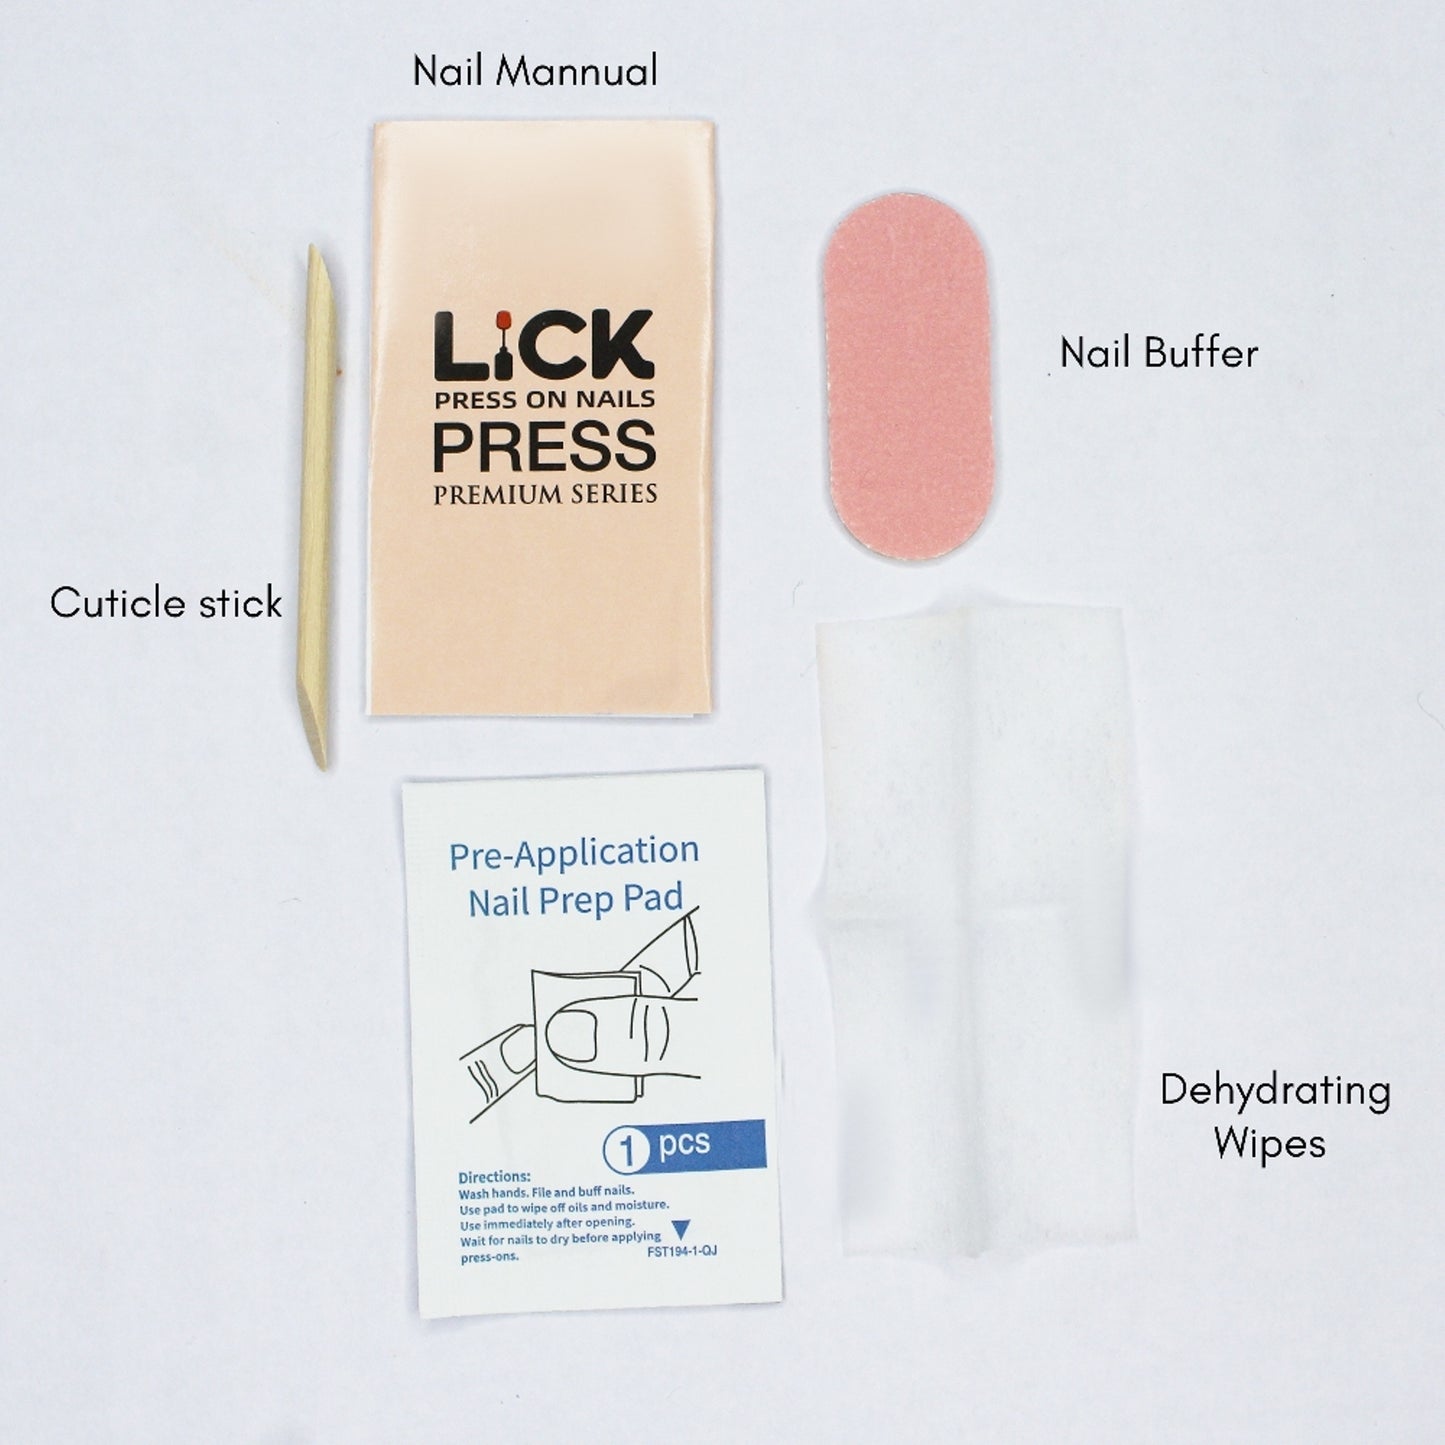 LICK NAILS Red and white Shade Press on Nails